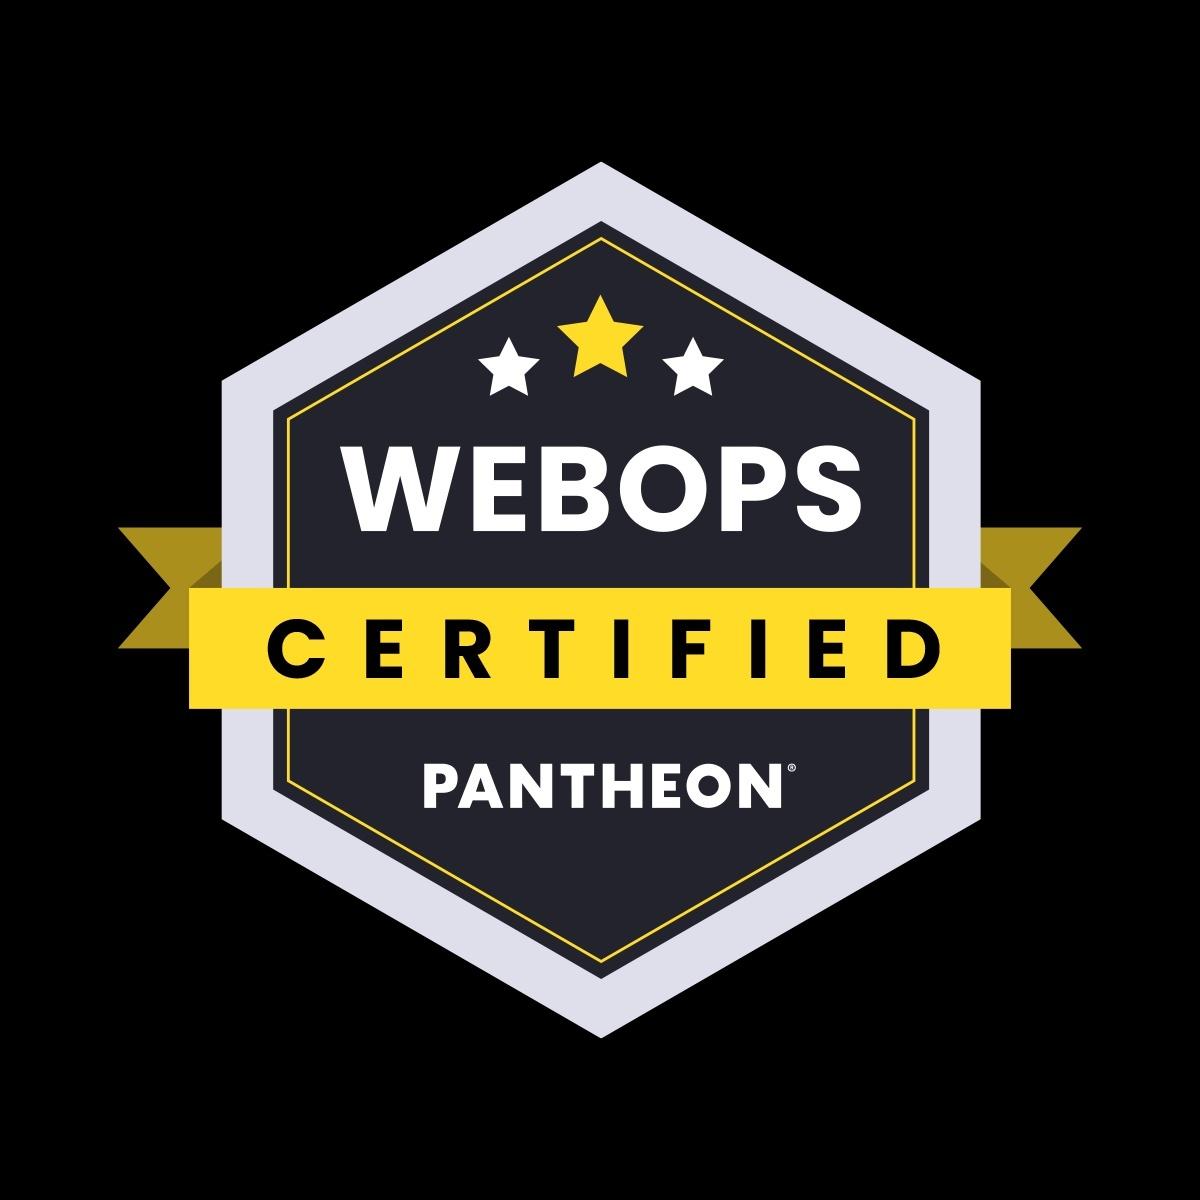 Web Ops Certification